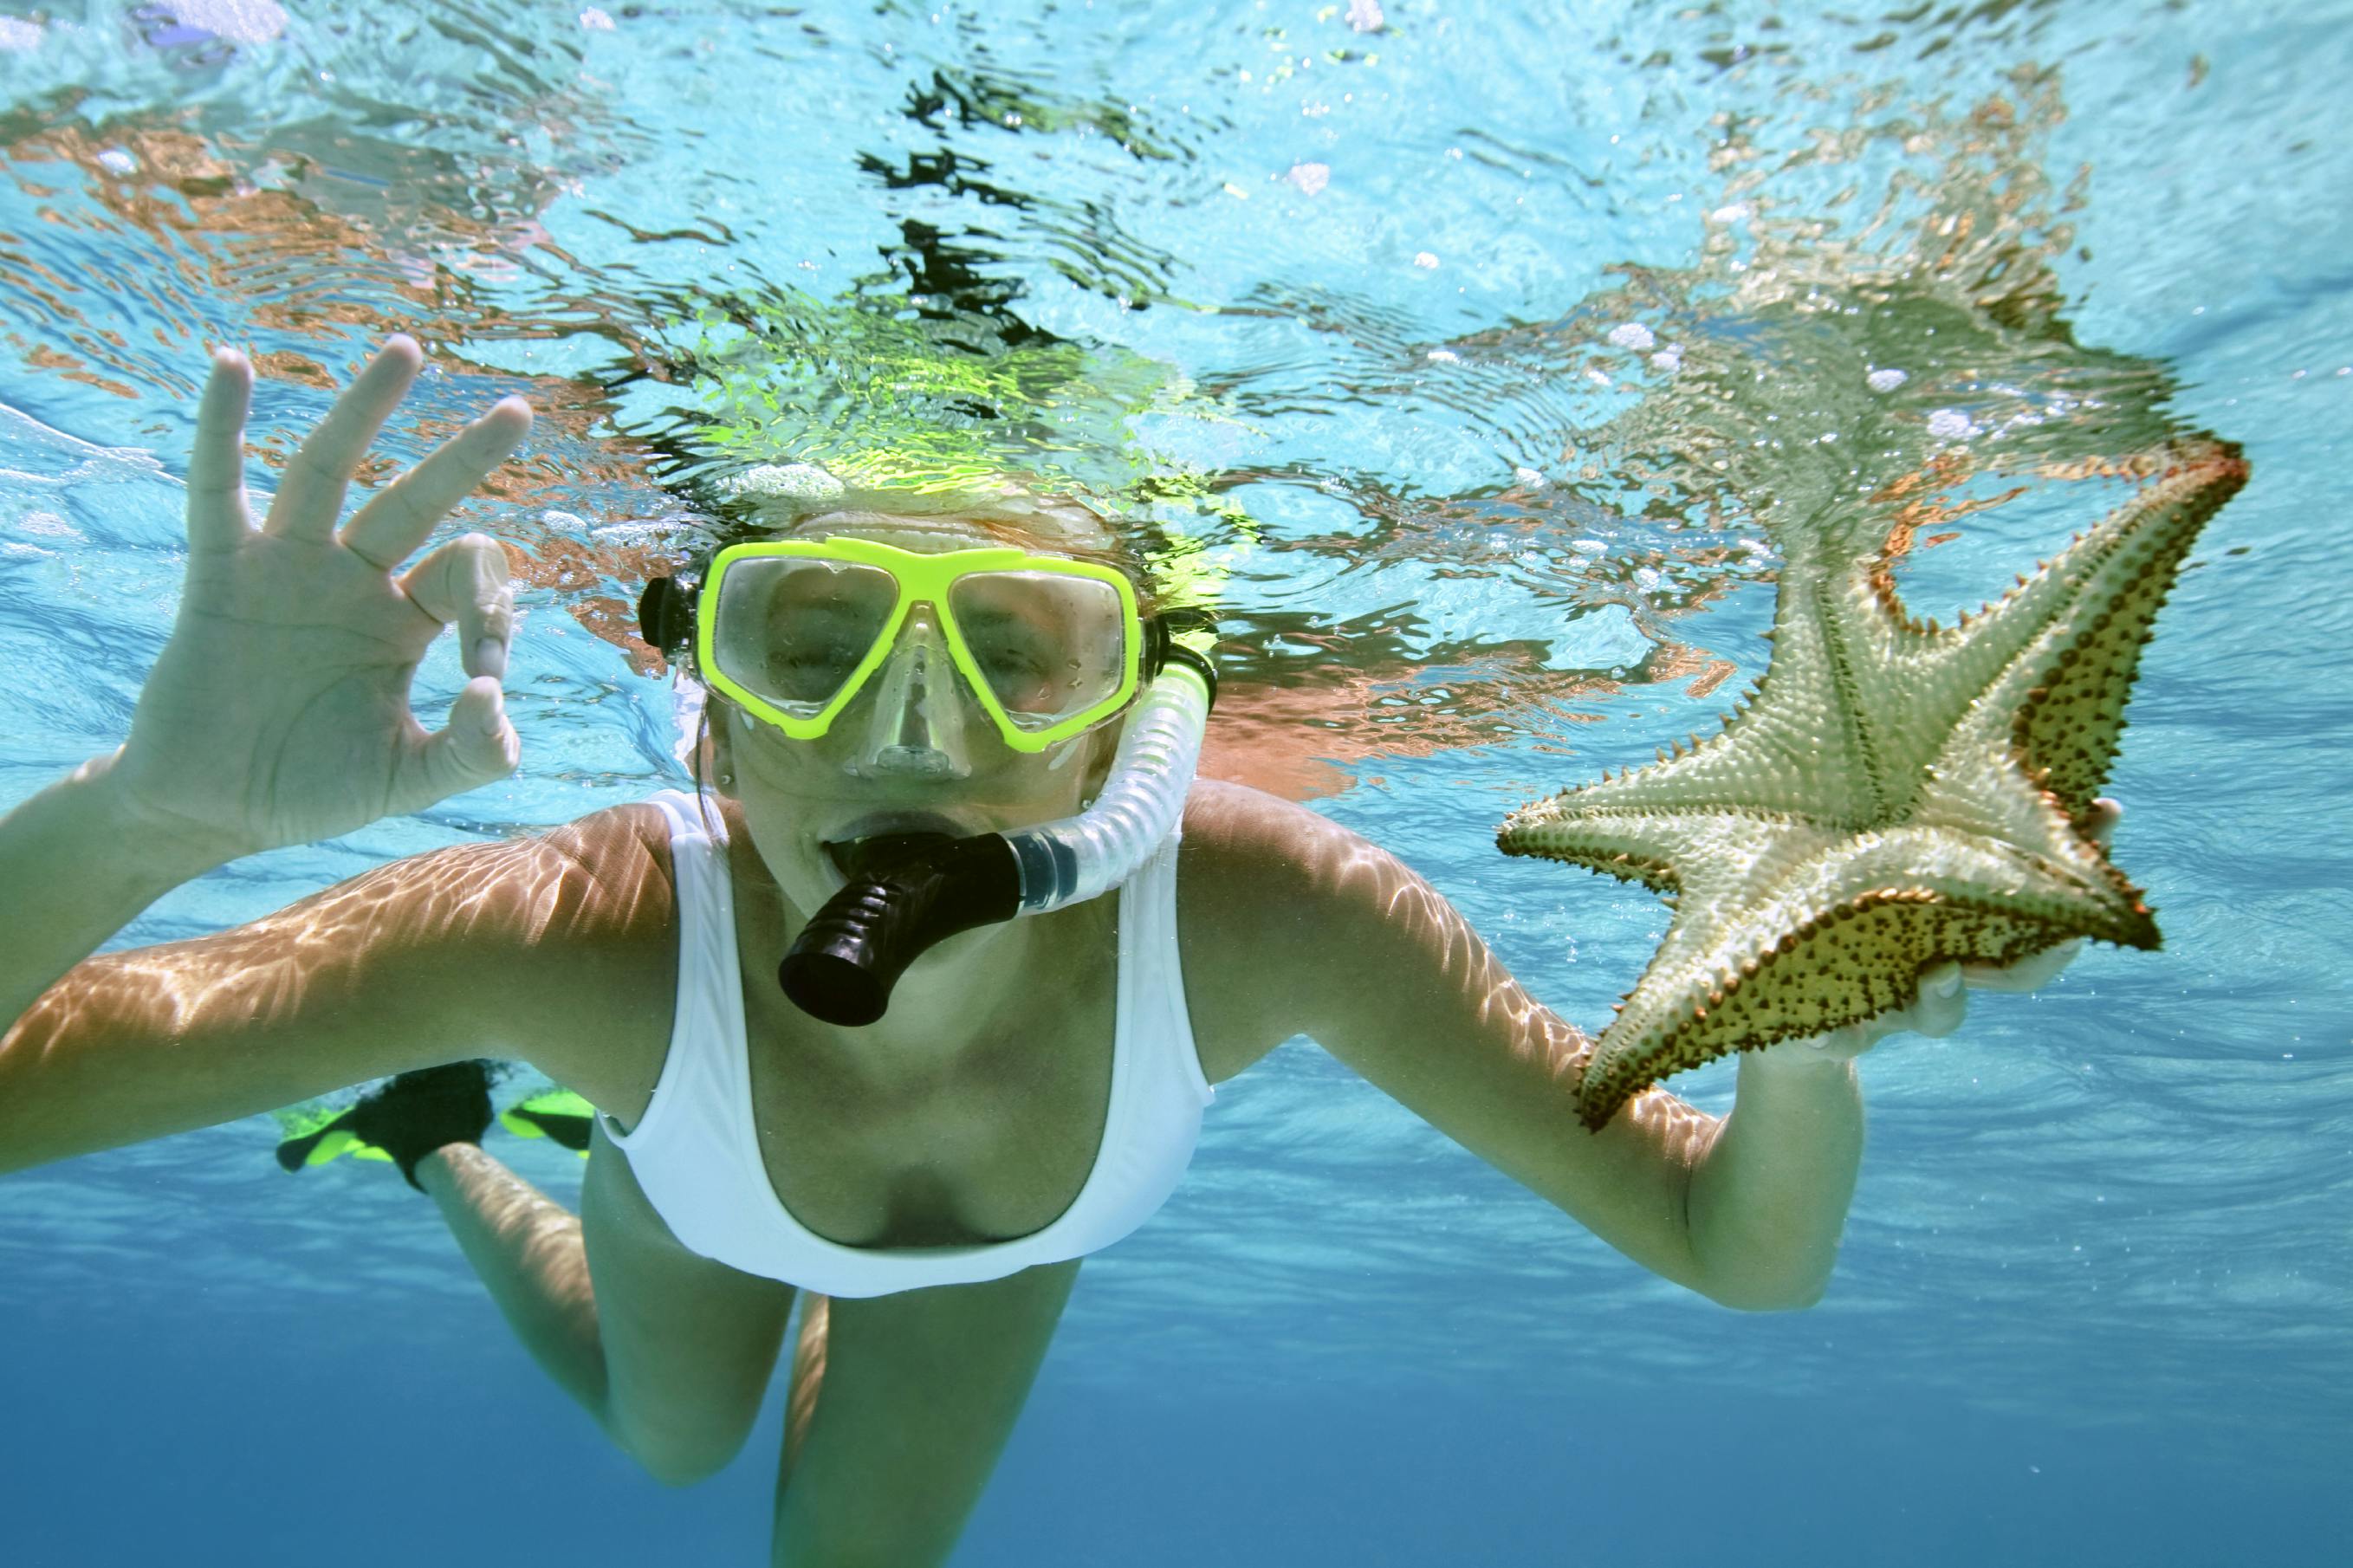 Swim & snorkel around Erakor Island and see what you discover erakor island resort & spa #erakorislandresort #vanuatuholiday